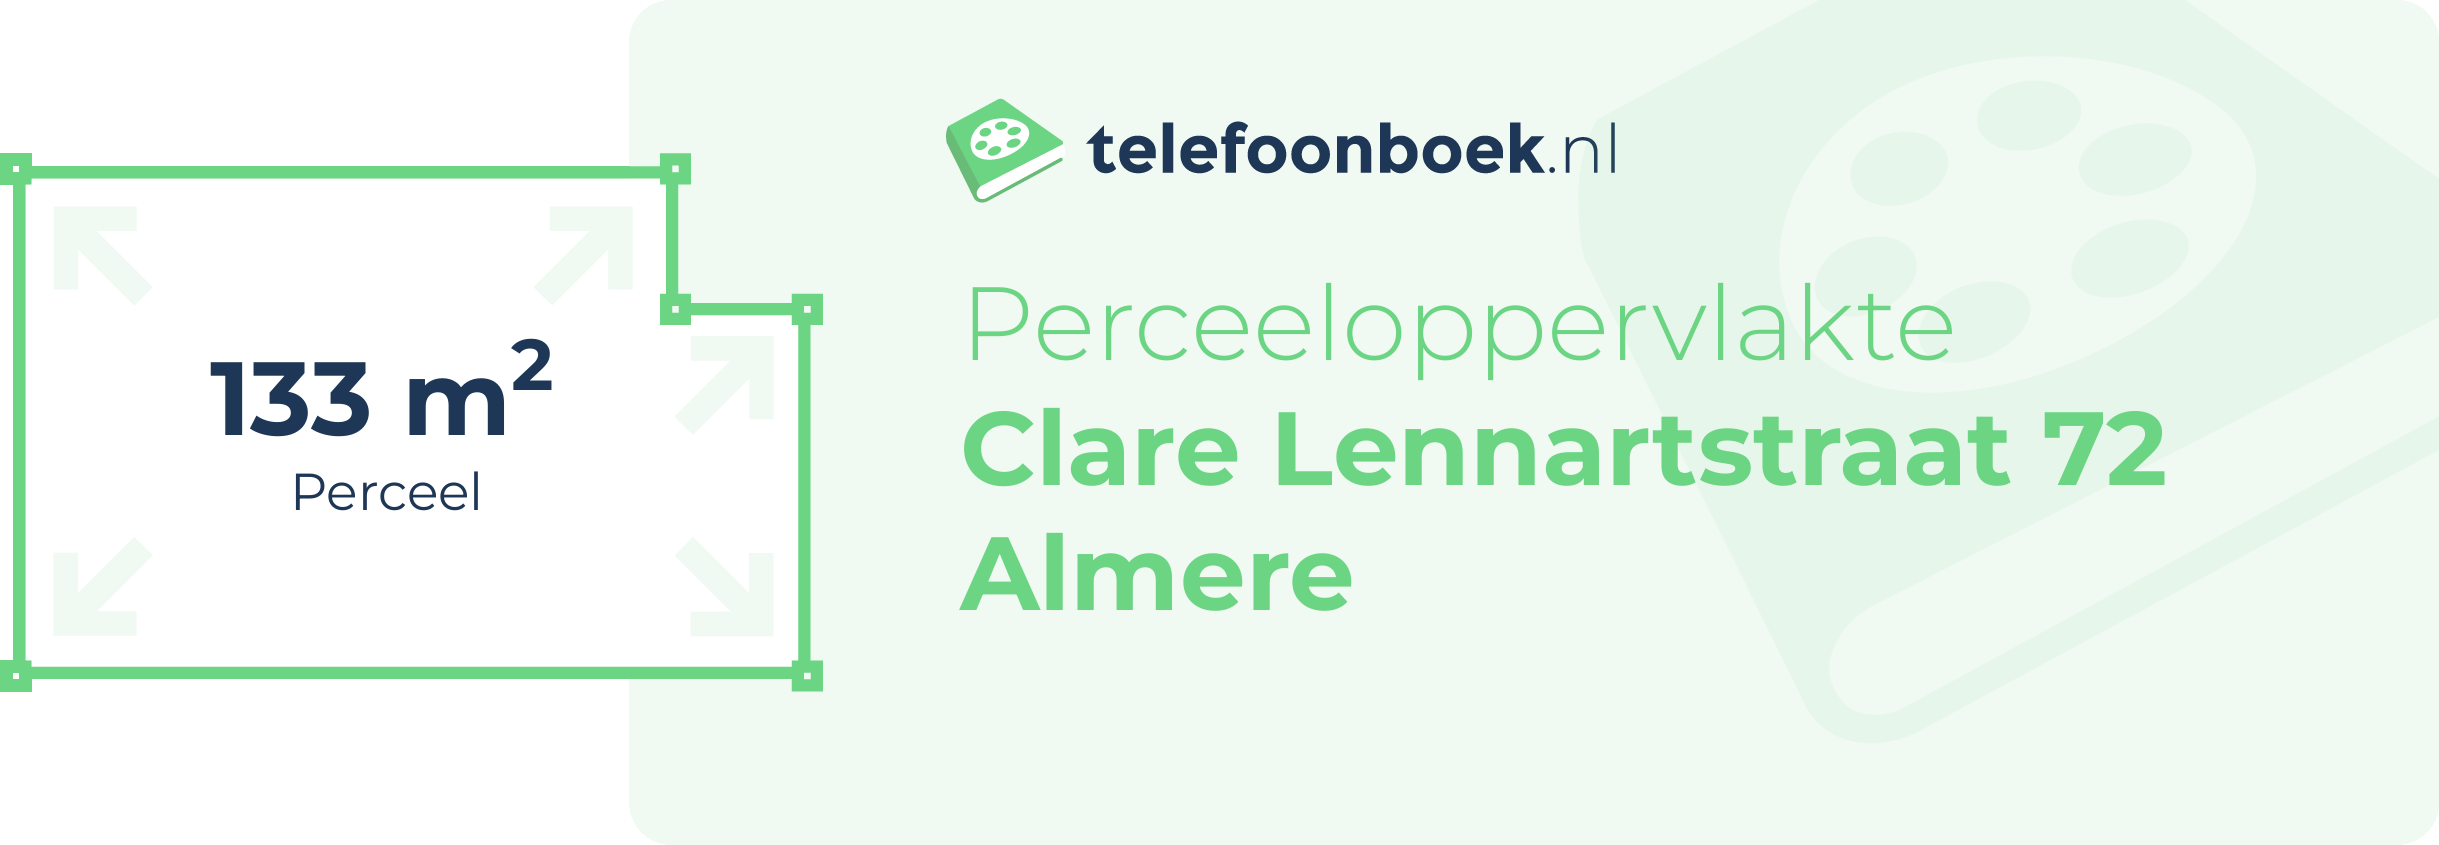 Perceeloppervlakte Clare Lennartstraat 72 Almere